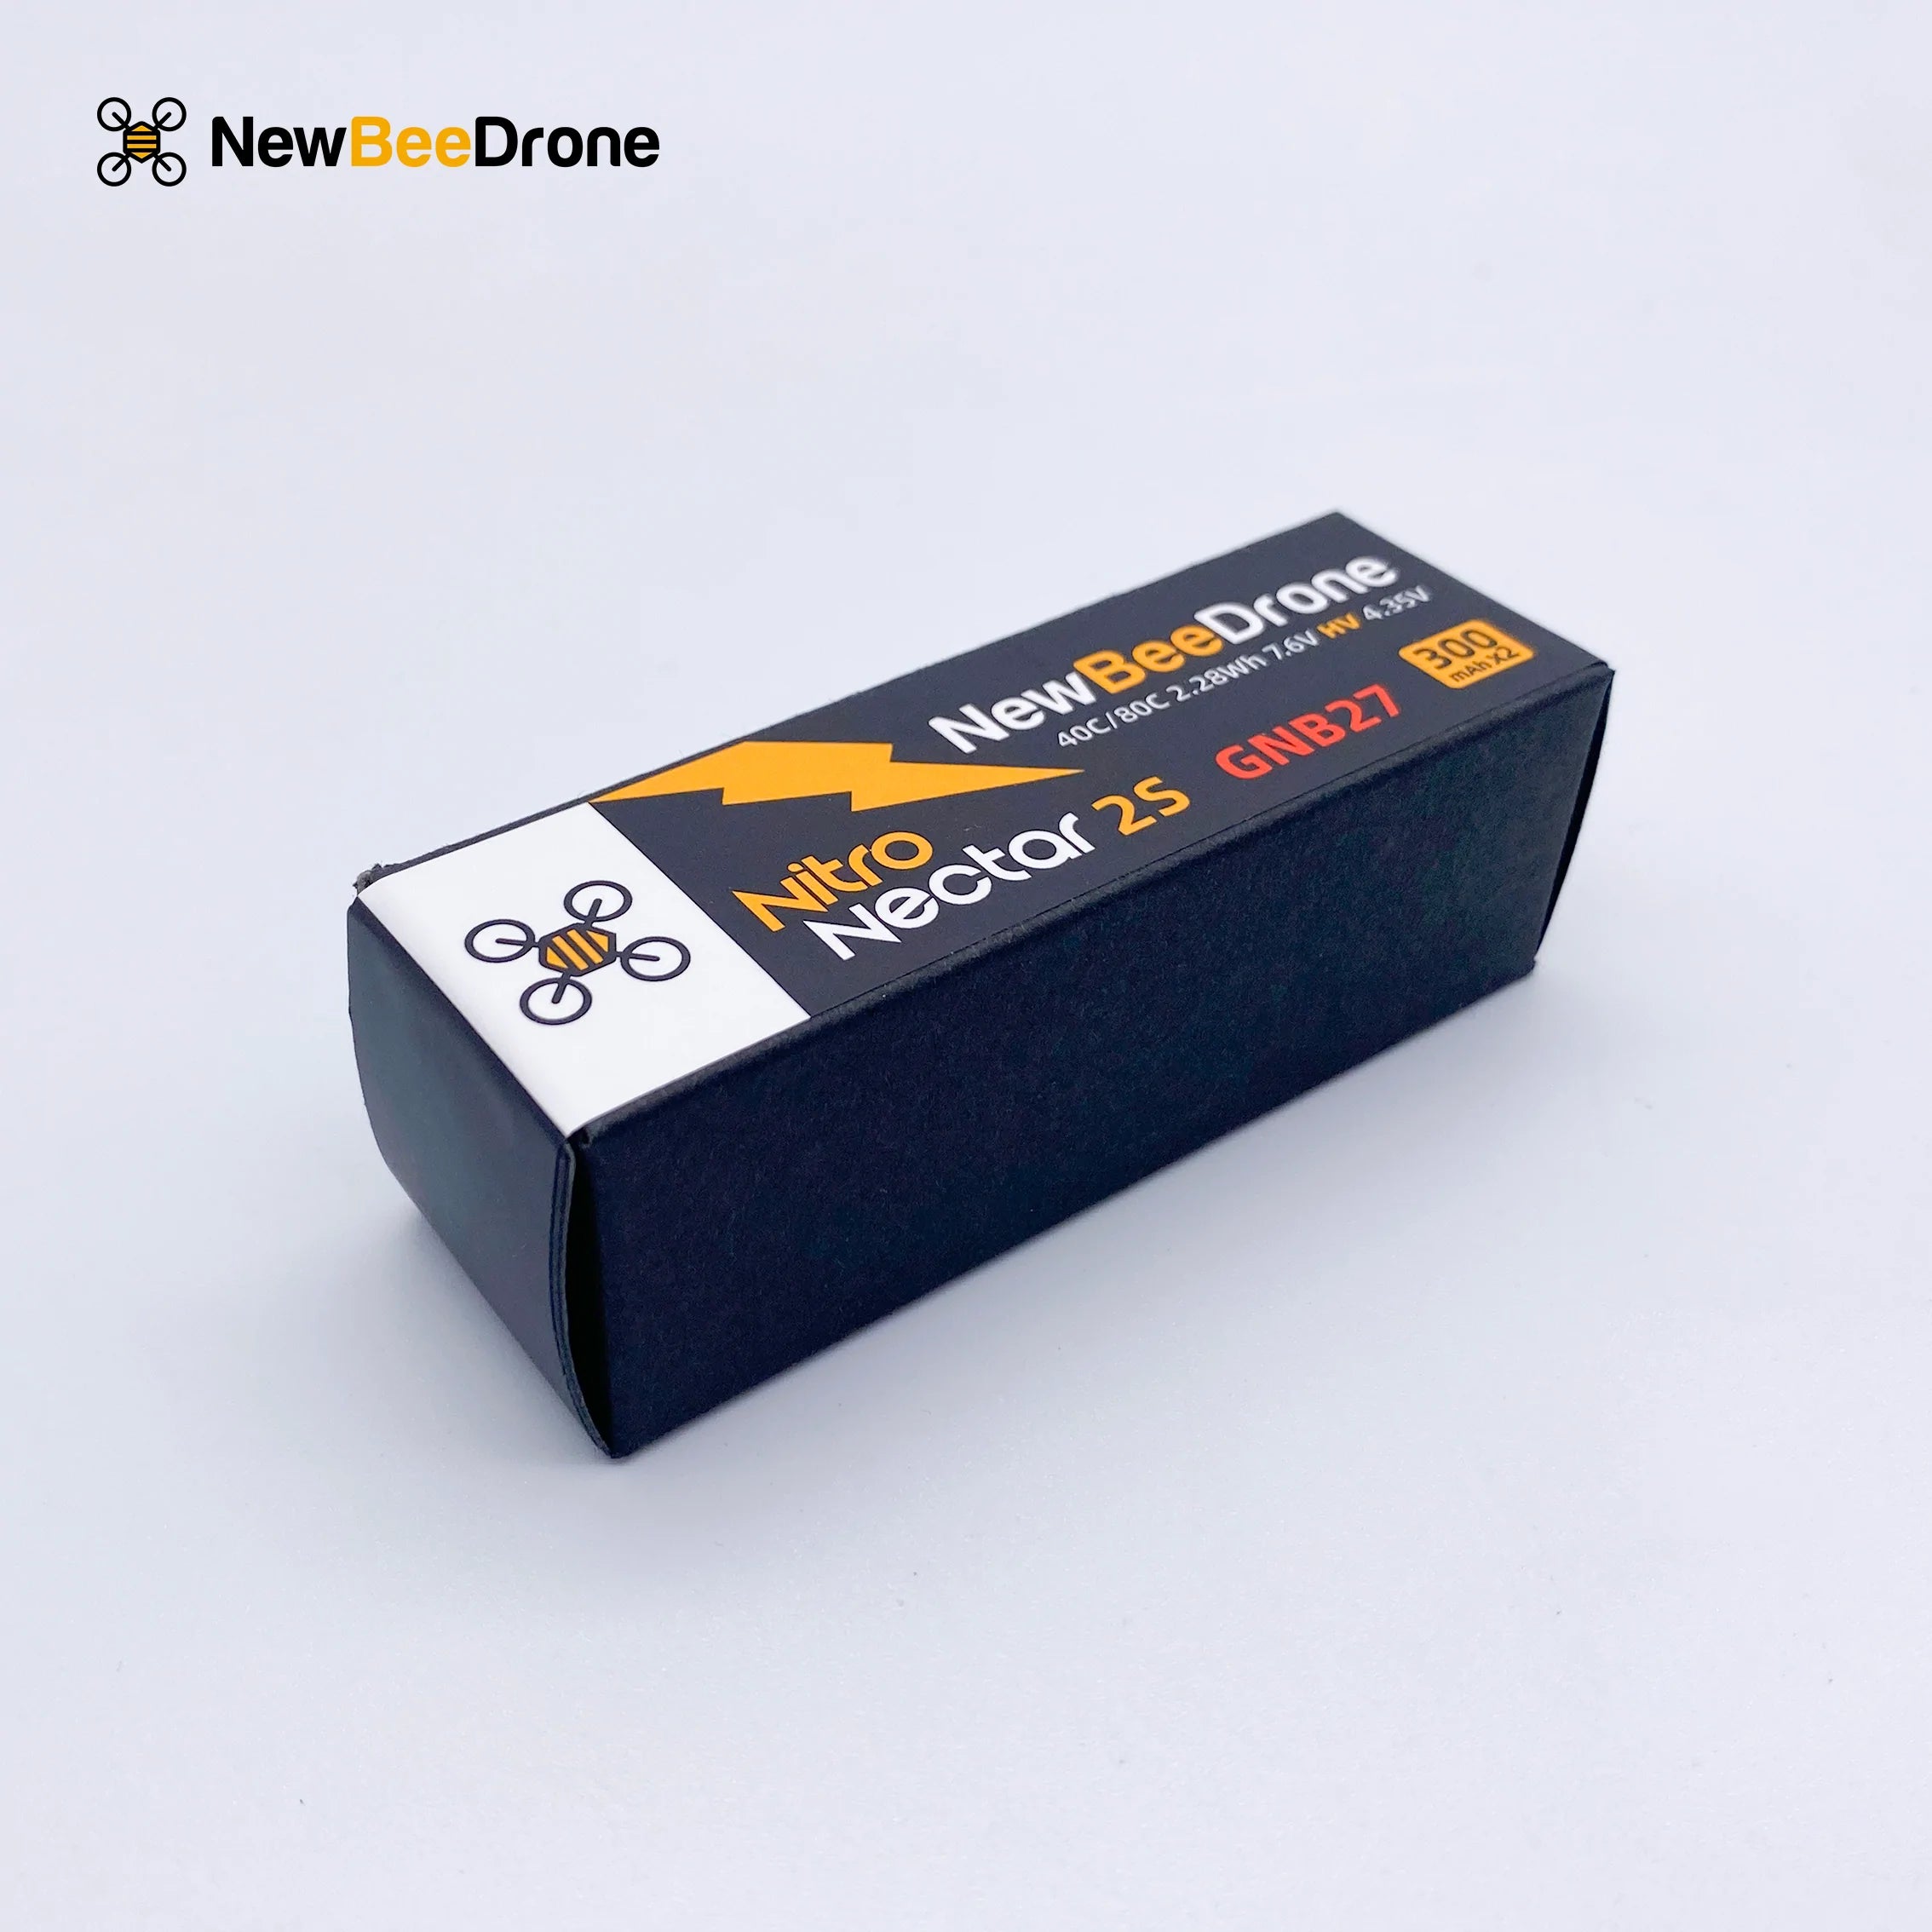 NewBeeDrone Nitro Nectar Gold 300mAh 2S HV LiPo Battery with GNB27 (2 Battery) [DG]